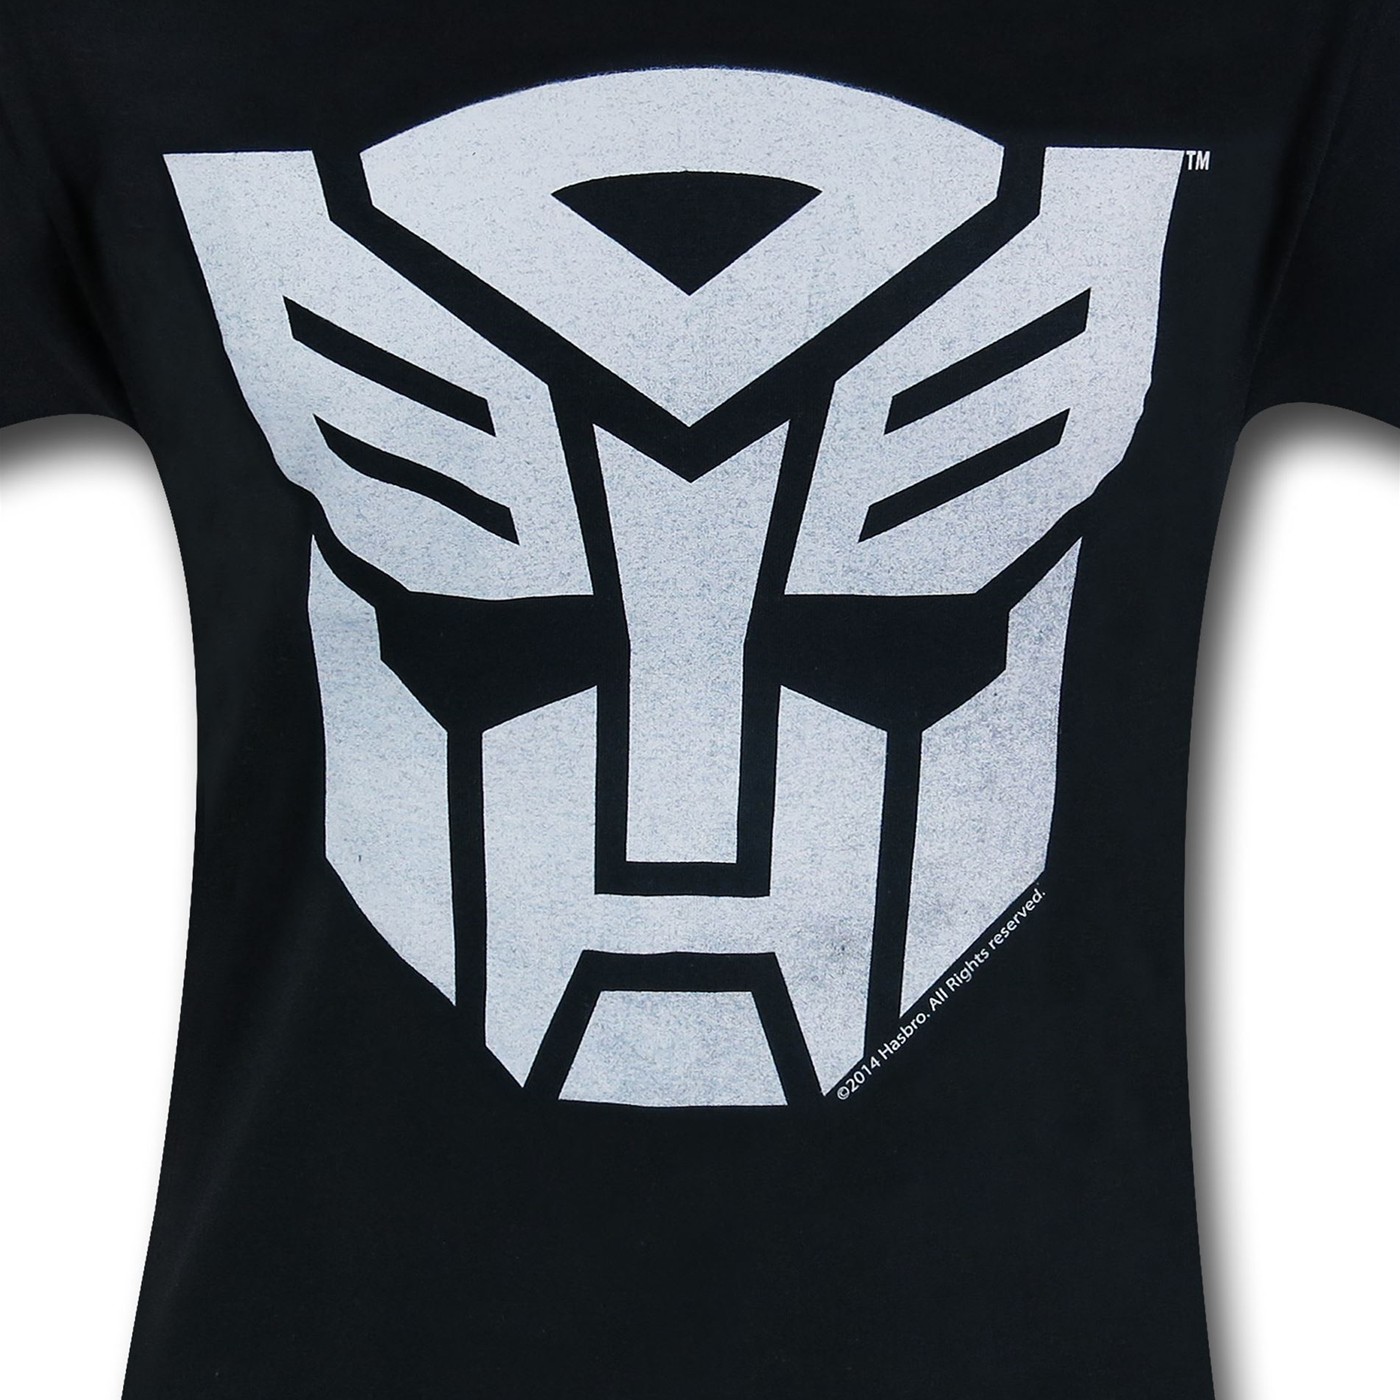 Transformers Autobot Grey Symbol T-Shirt